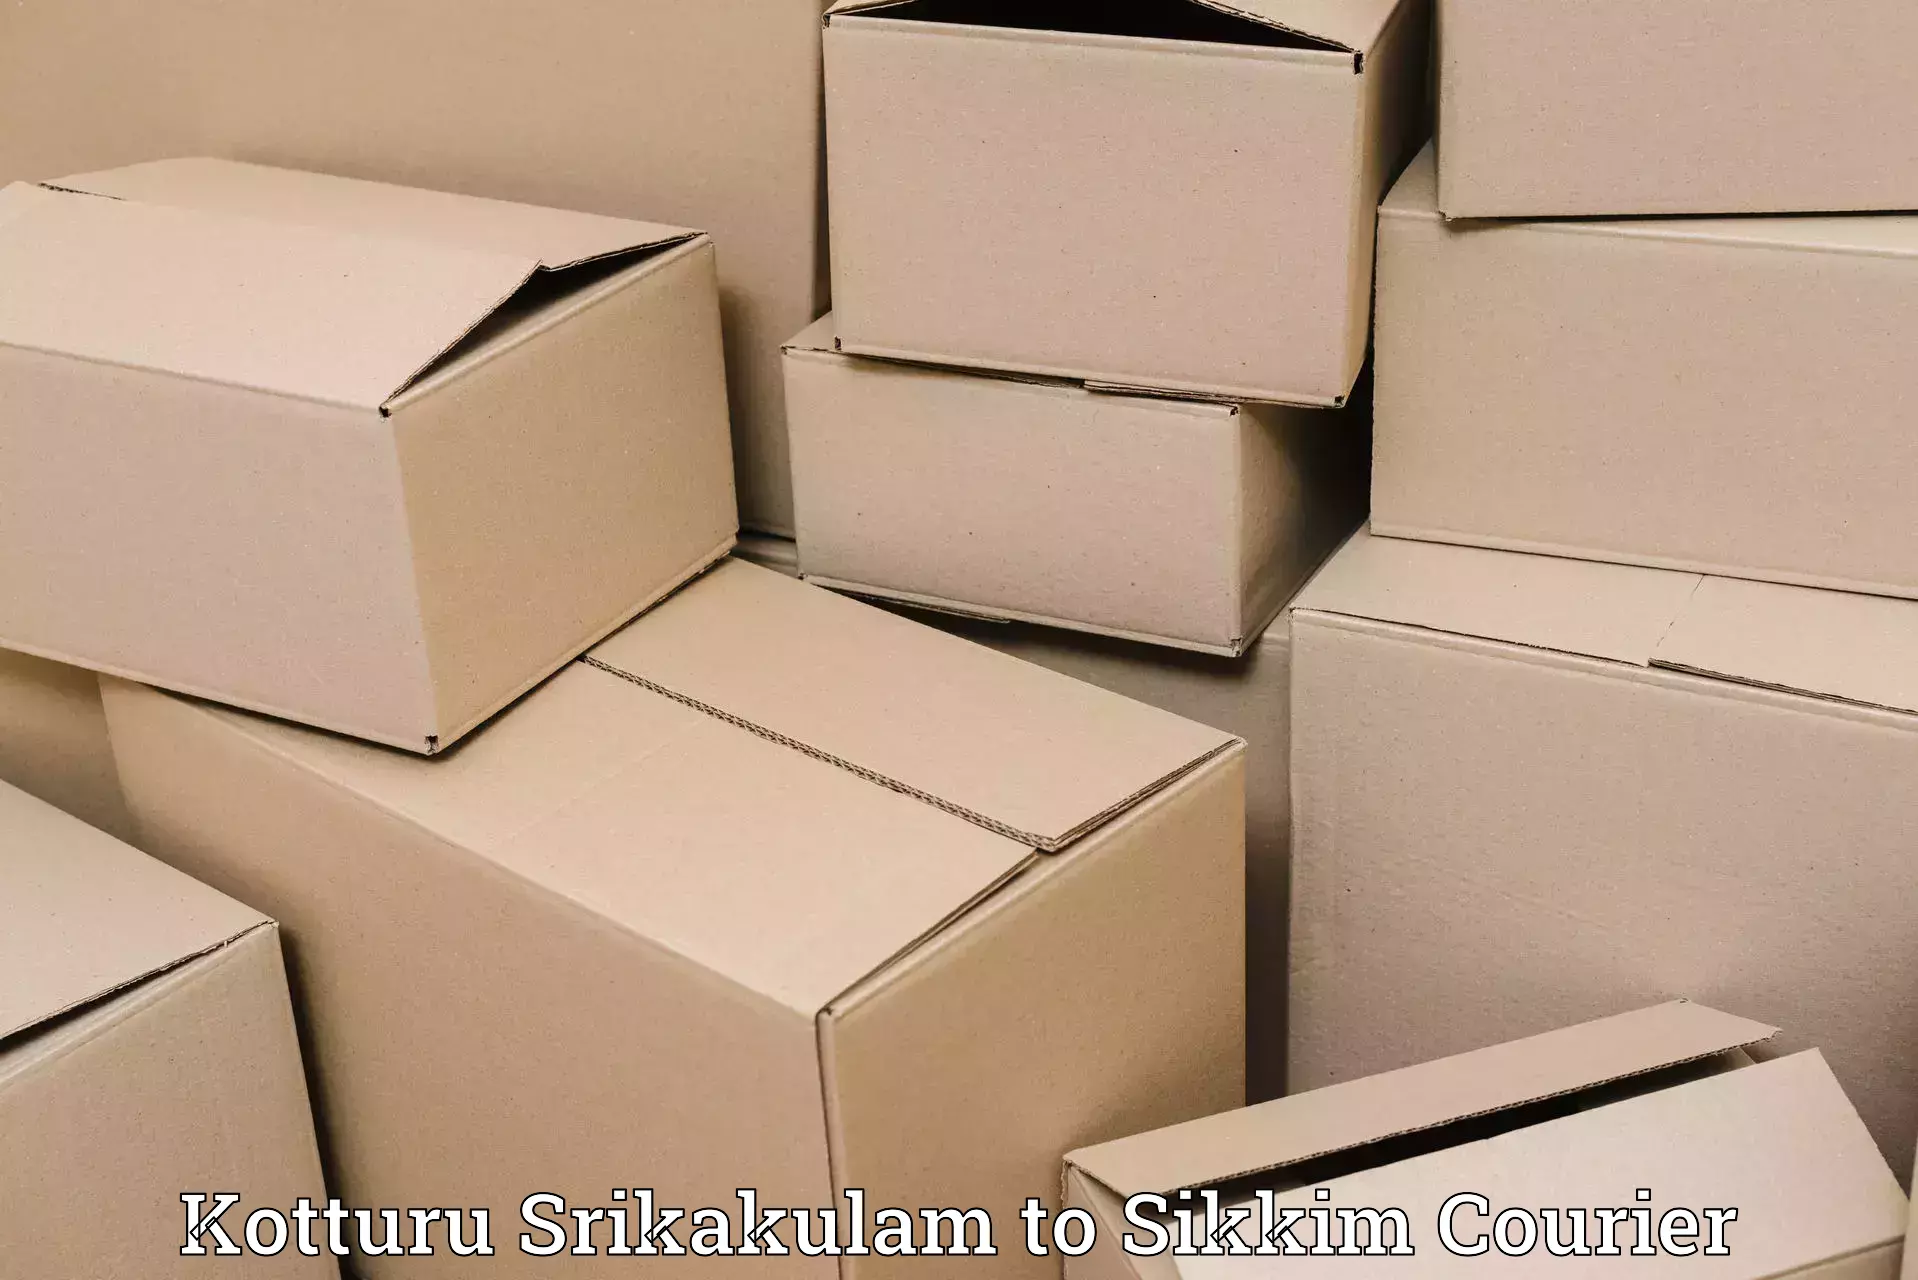 24/7 courier service Kotturu Srikakulam to Rangpo